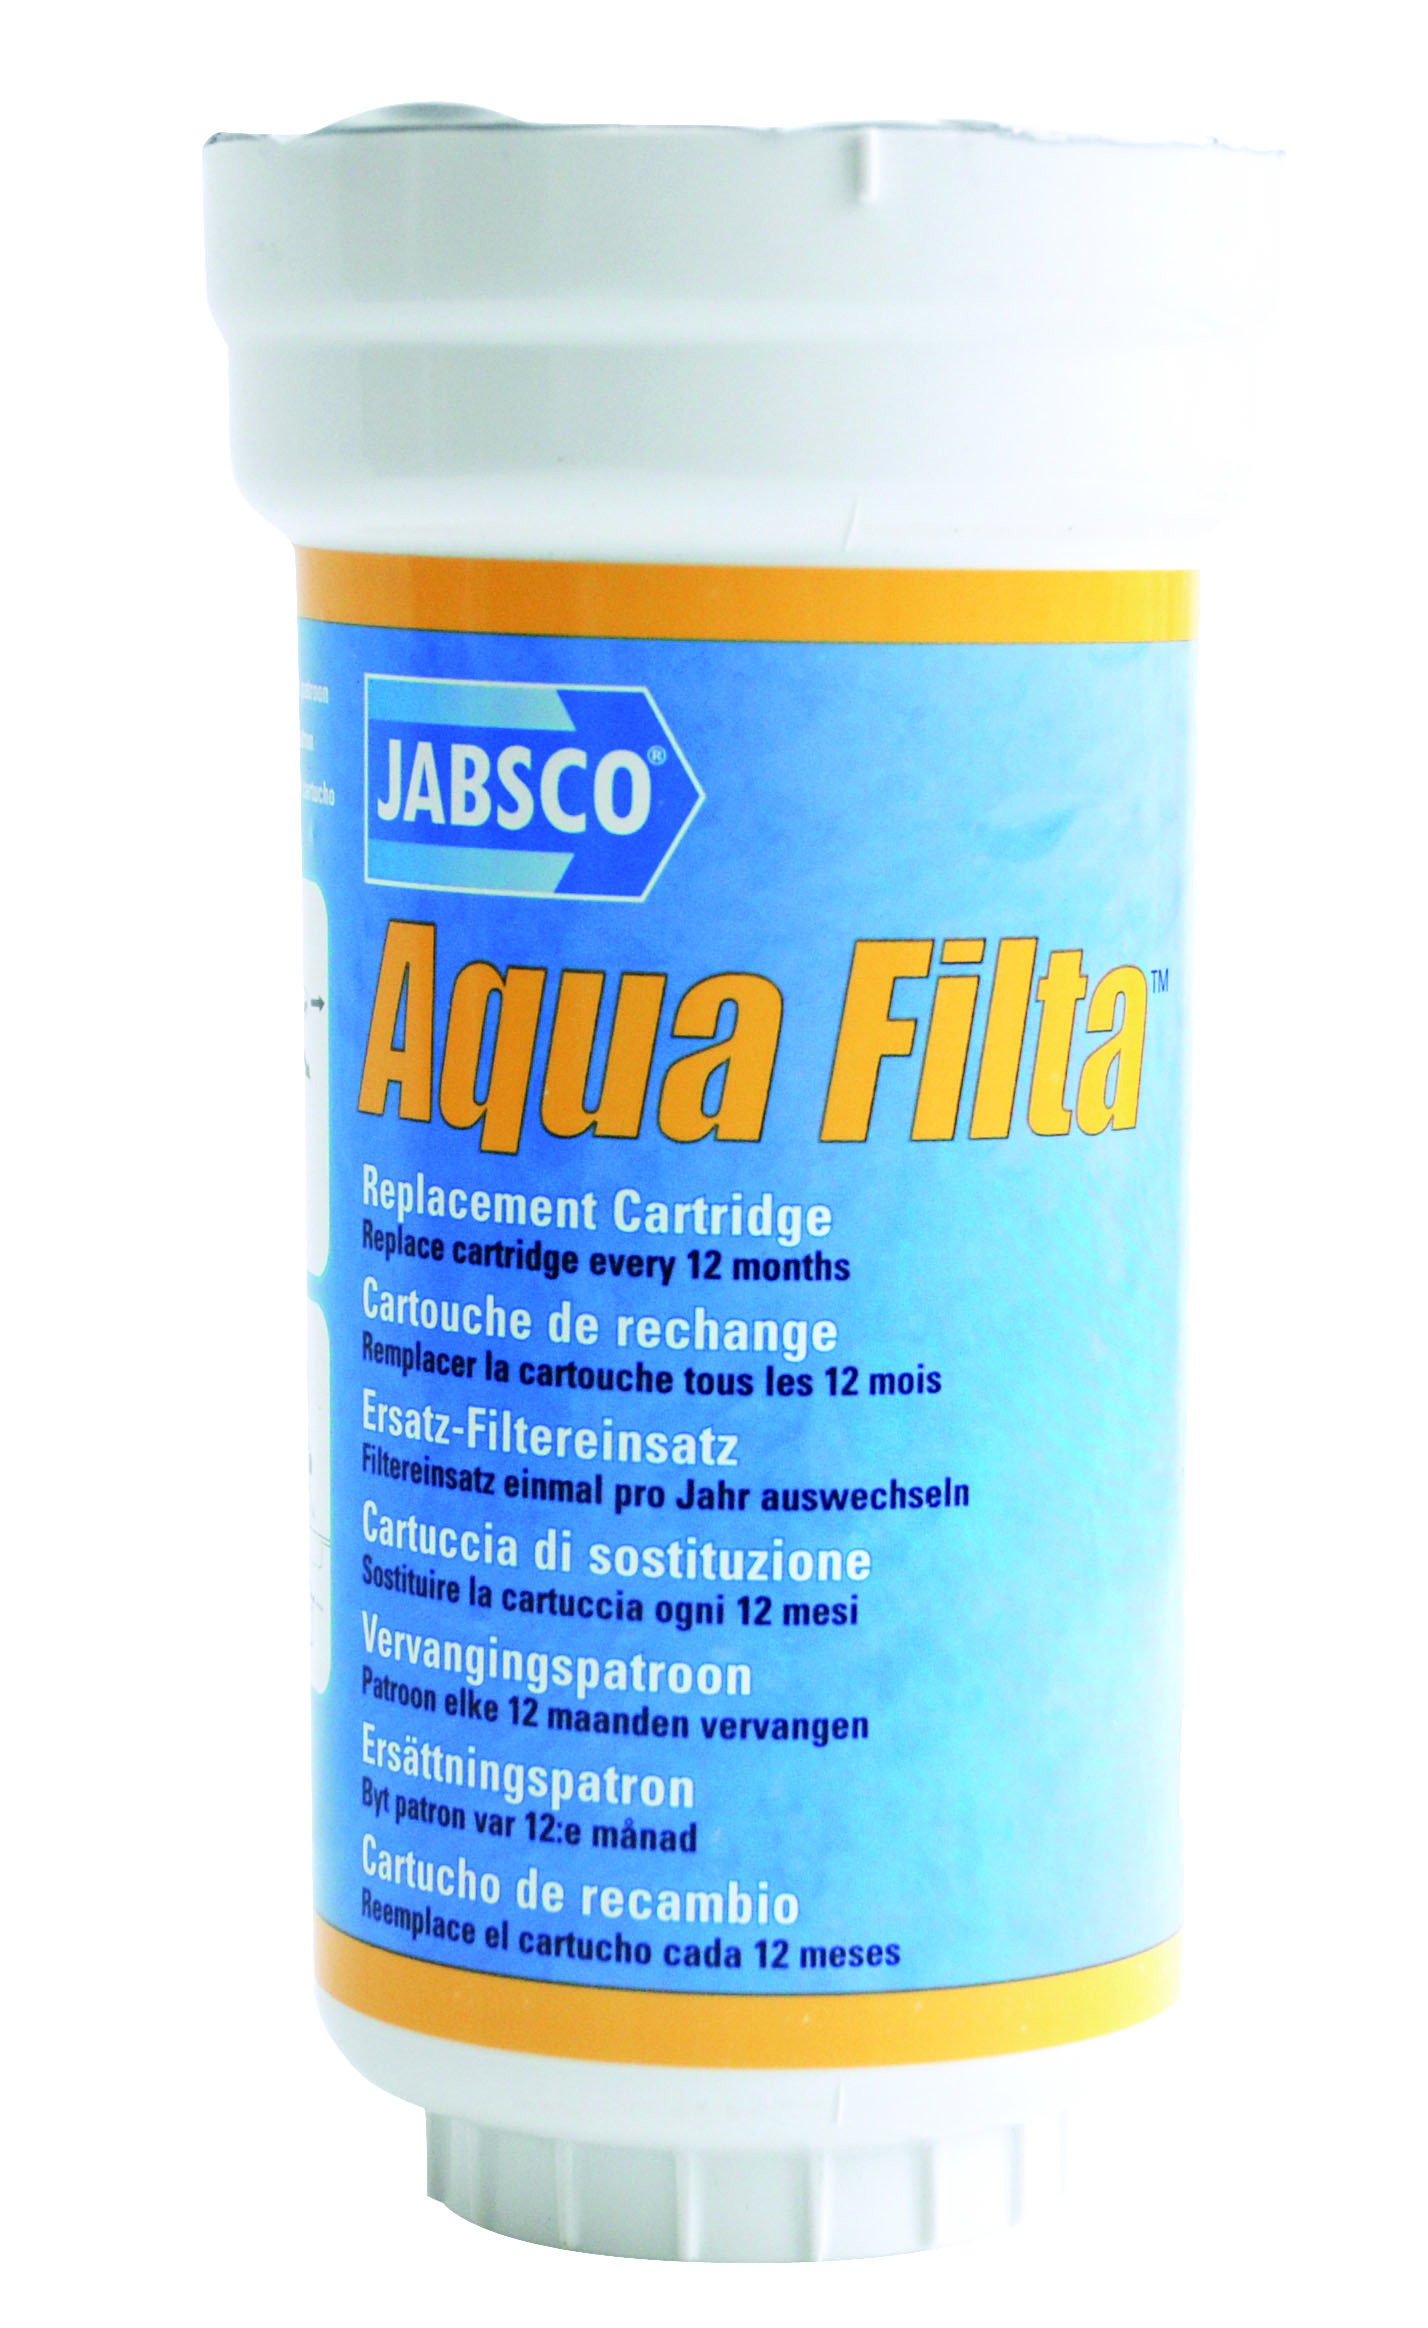 Ersatz-Filtereinsatz zu Aqua-Filta